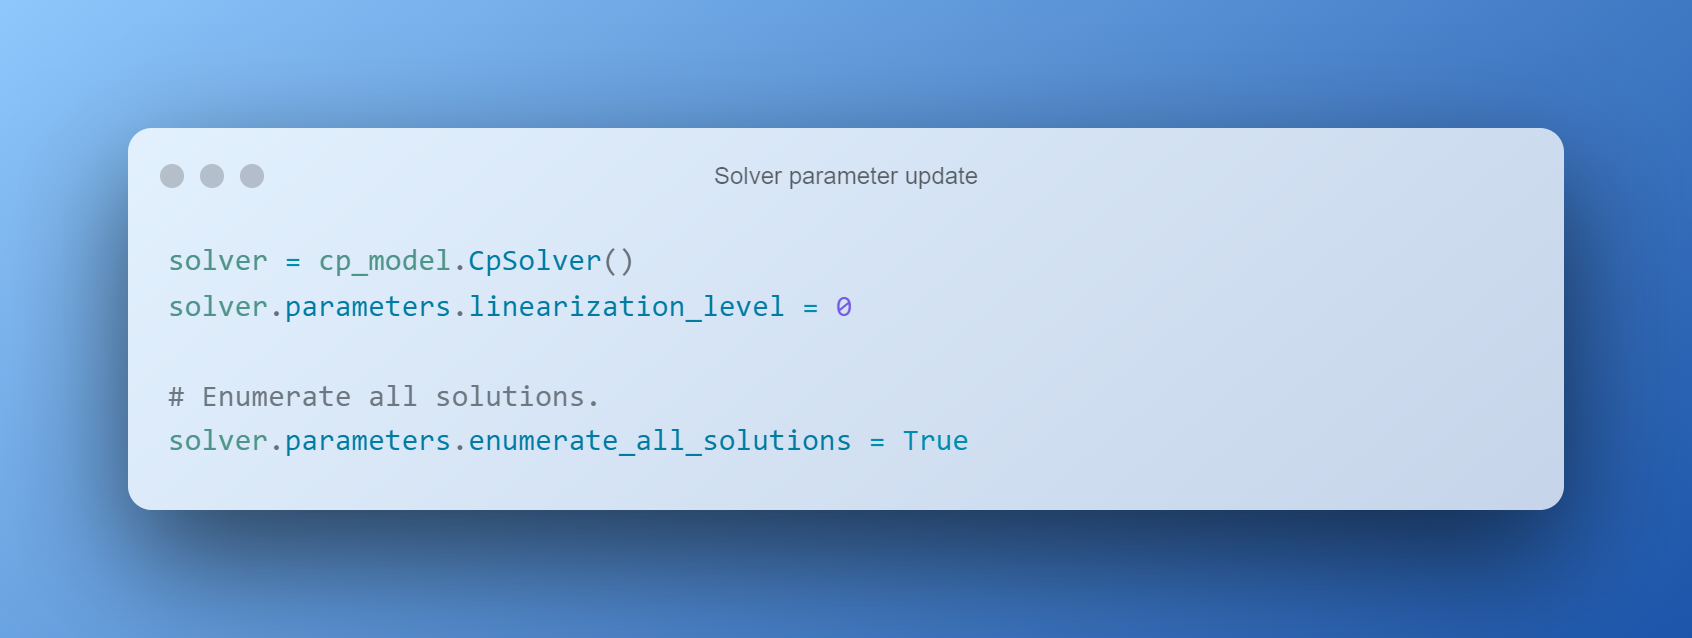 Solver Parameter Update